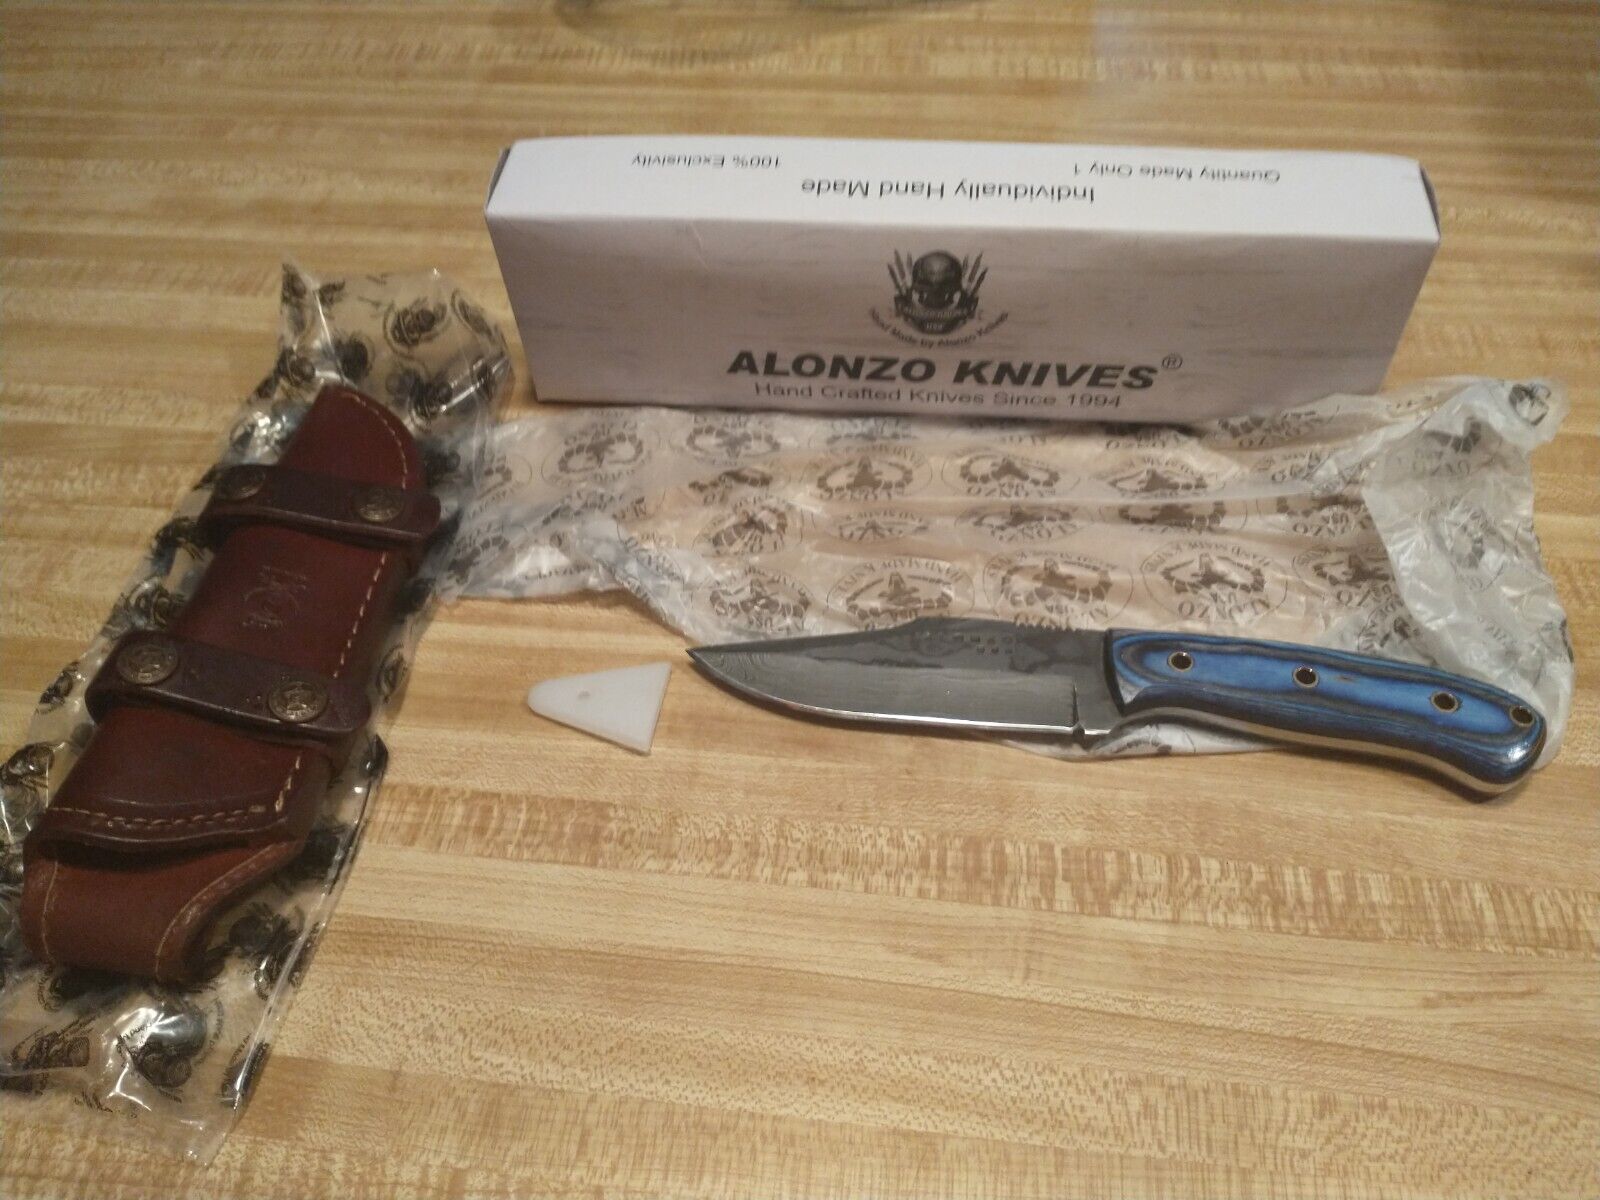 New Alonzo U.S.A Custom Hunting Knife With Leather Sheath And Blue Laminated.